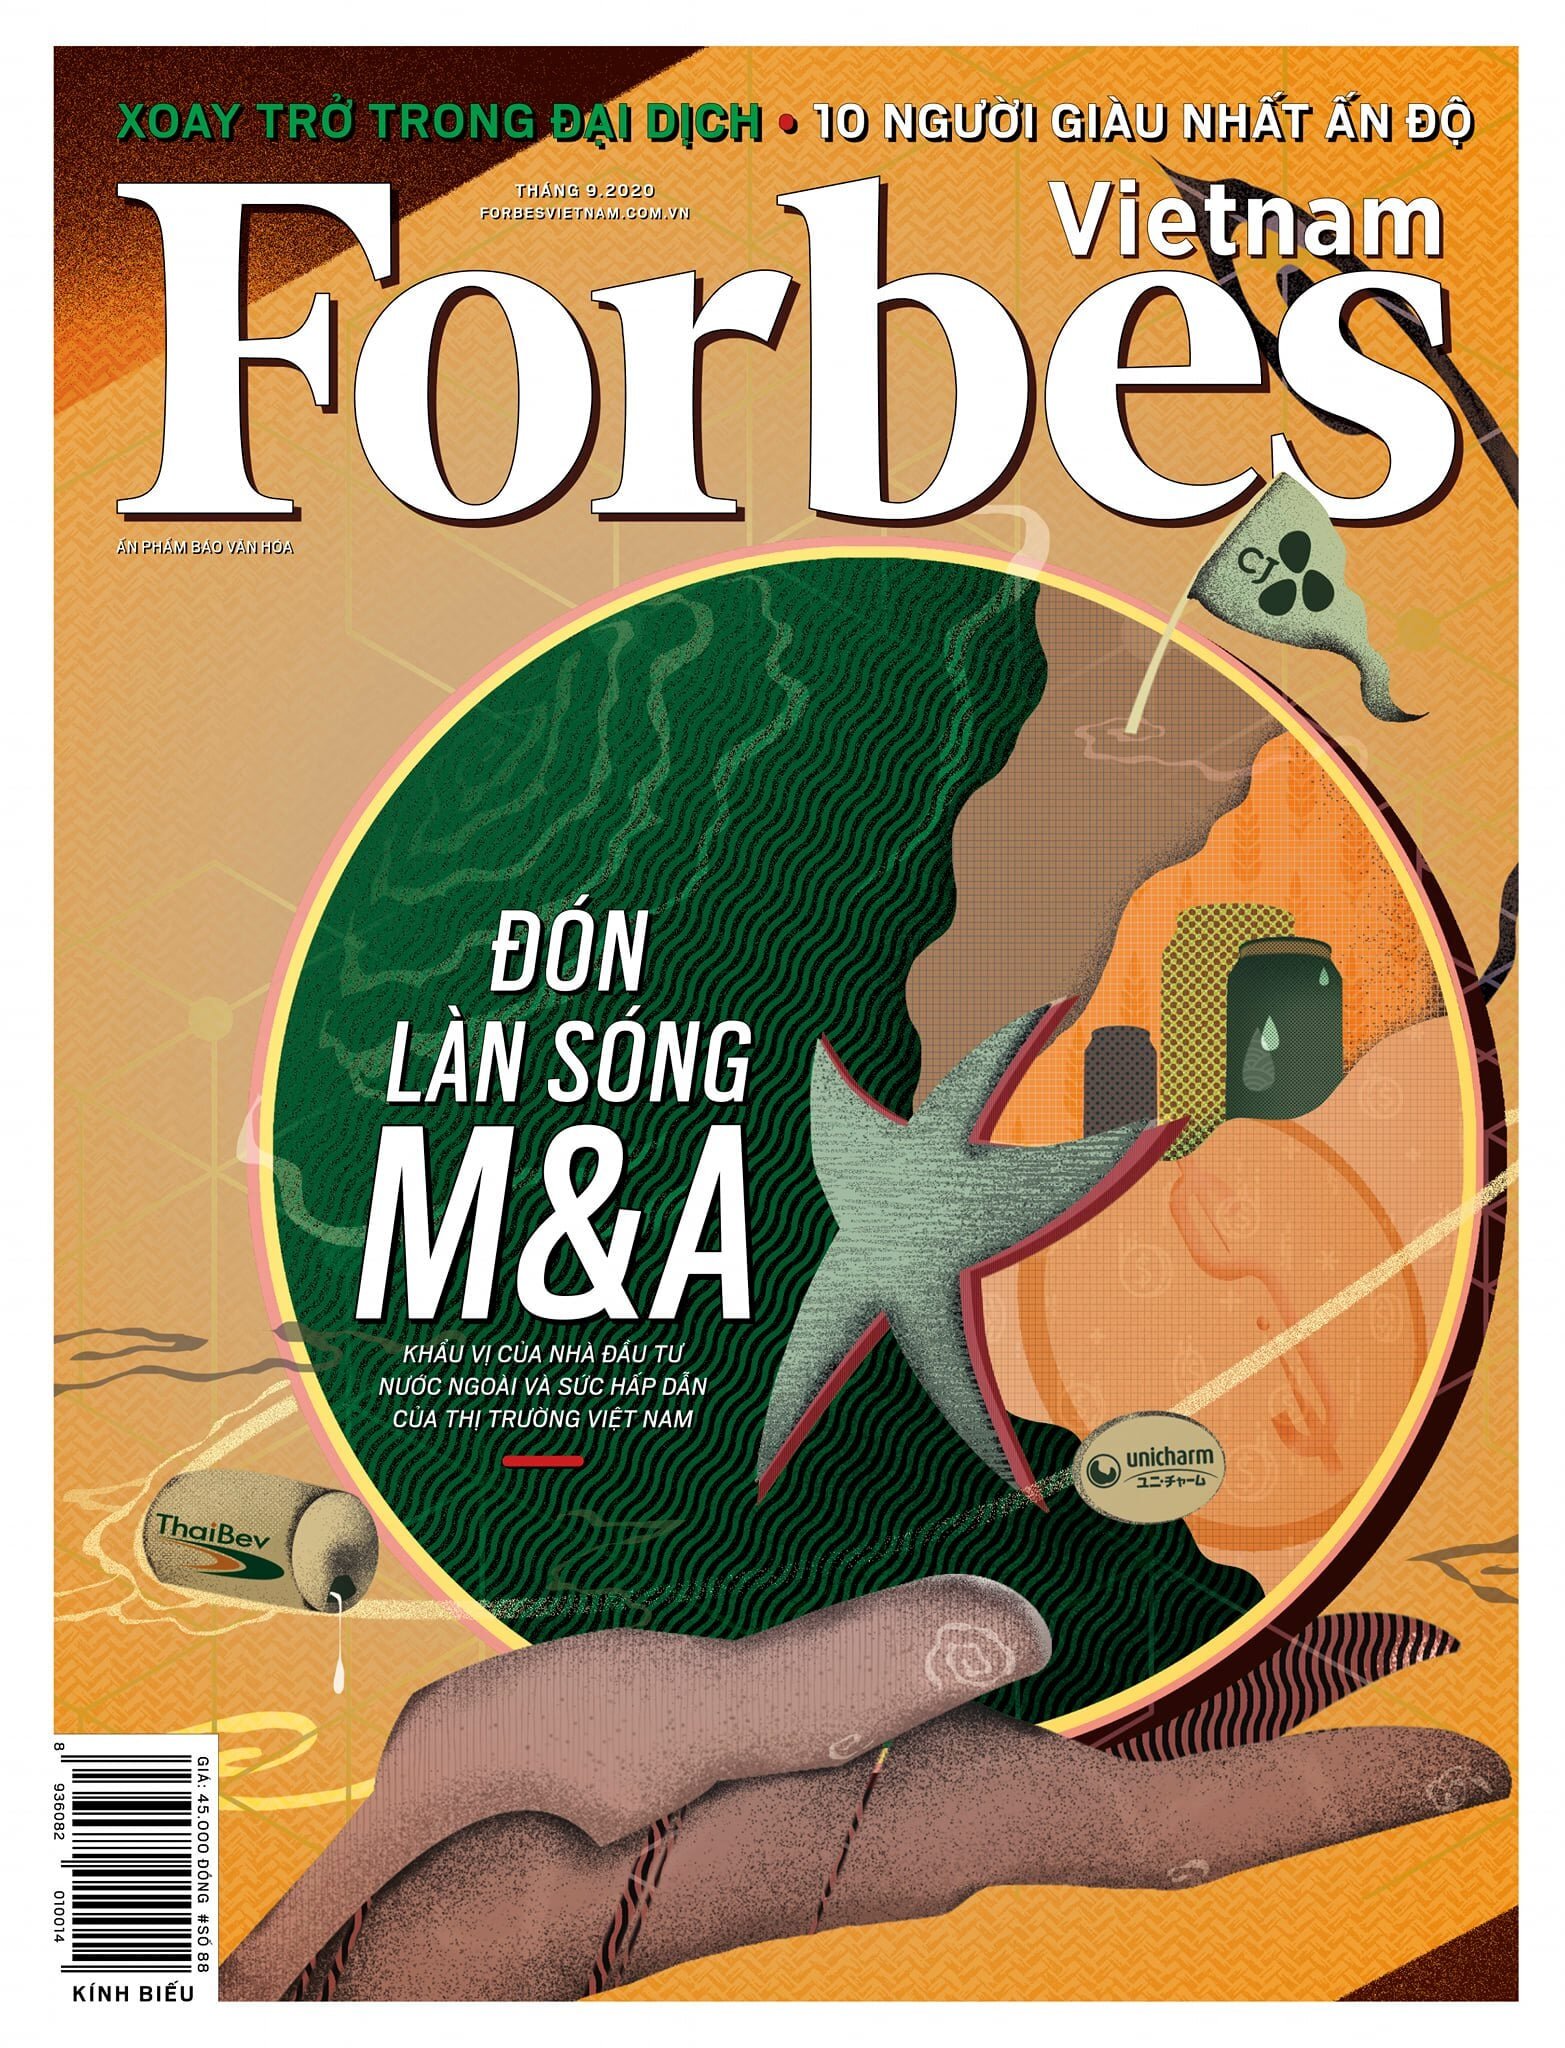 Forbes Vietnam Cover September 2020 Issue